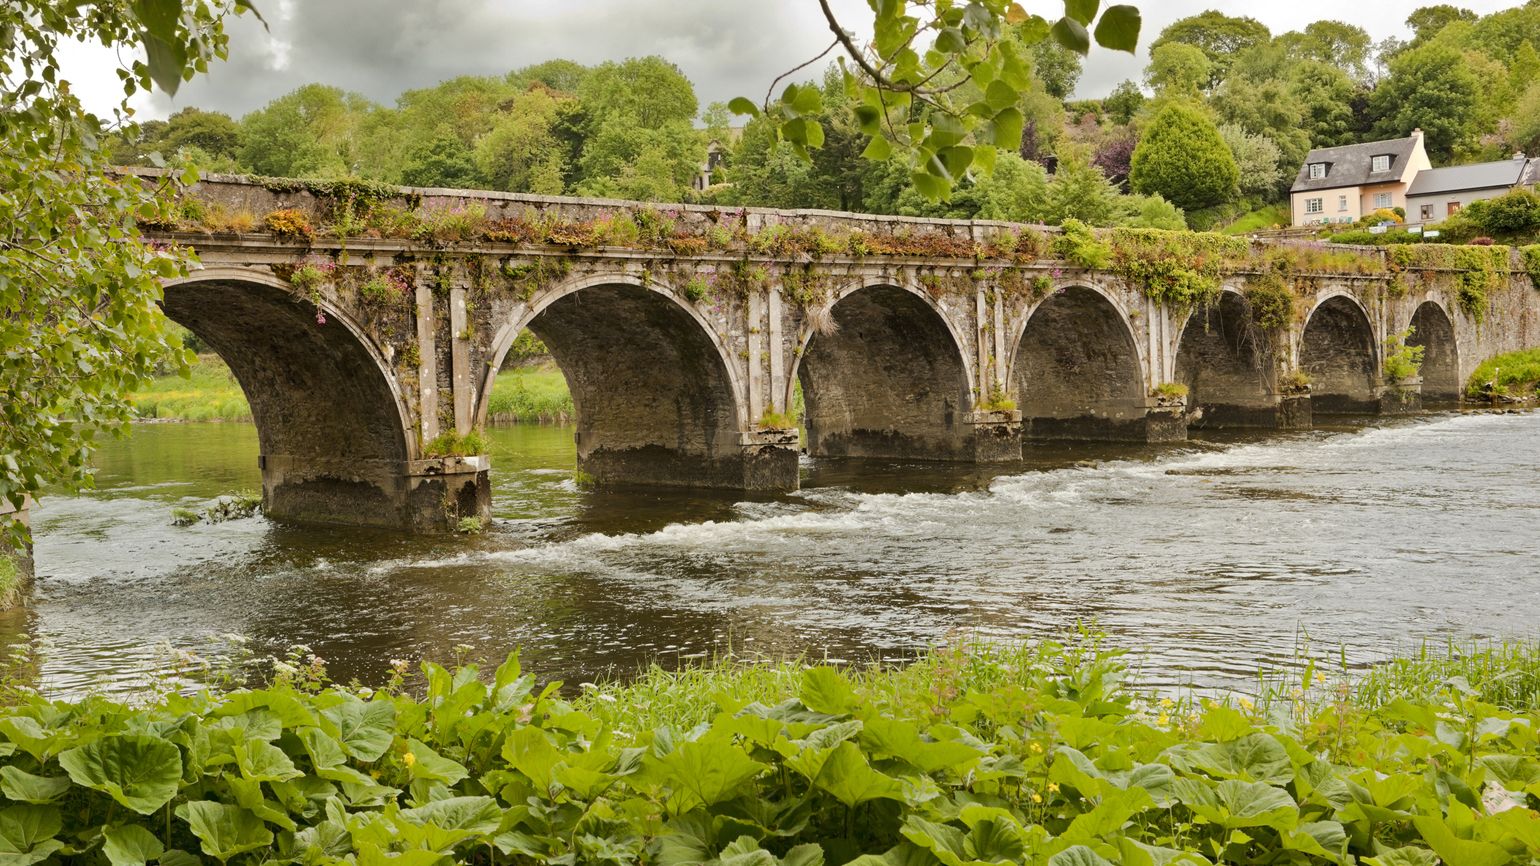 Water flowing under the medieval Irish bridge